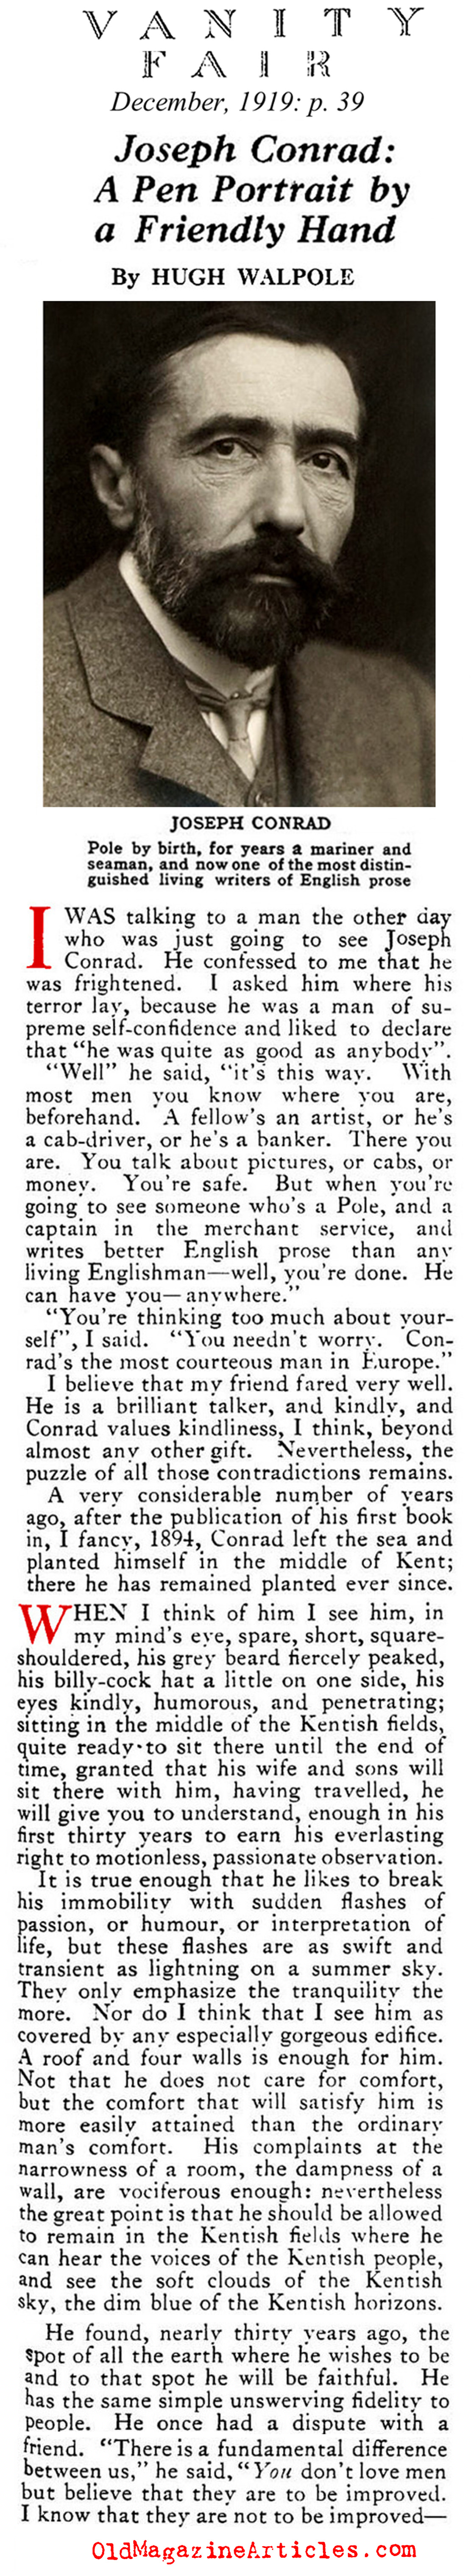 Joseph Conrad as Interviewed by Hugh Walpole (Vanity Fair, 1919)